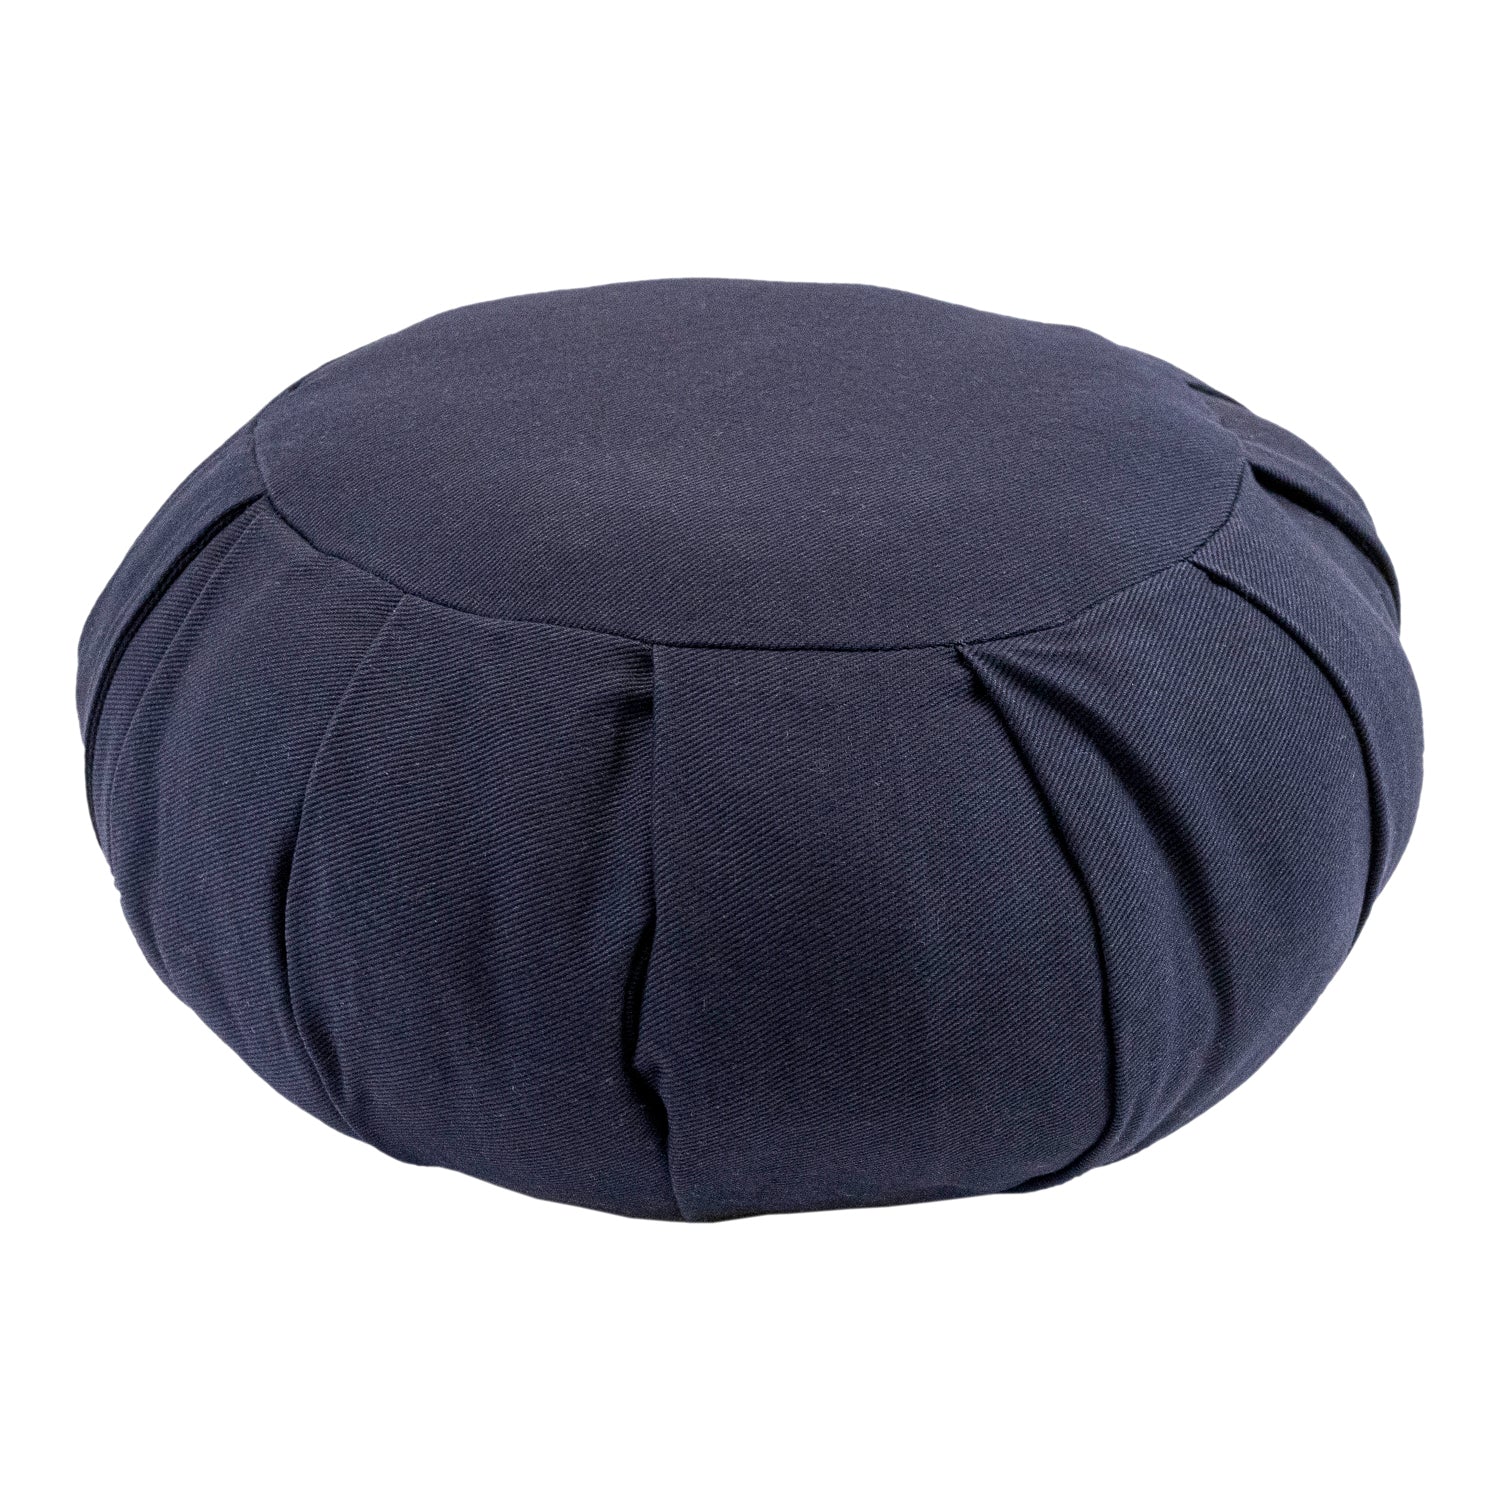 Round Cotton Zafu Meditation Cushion